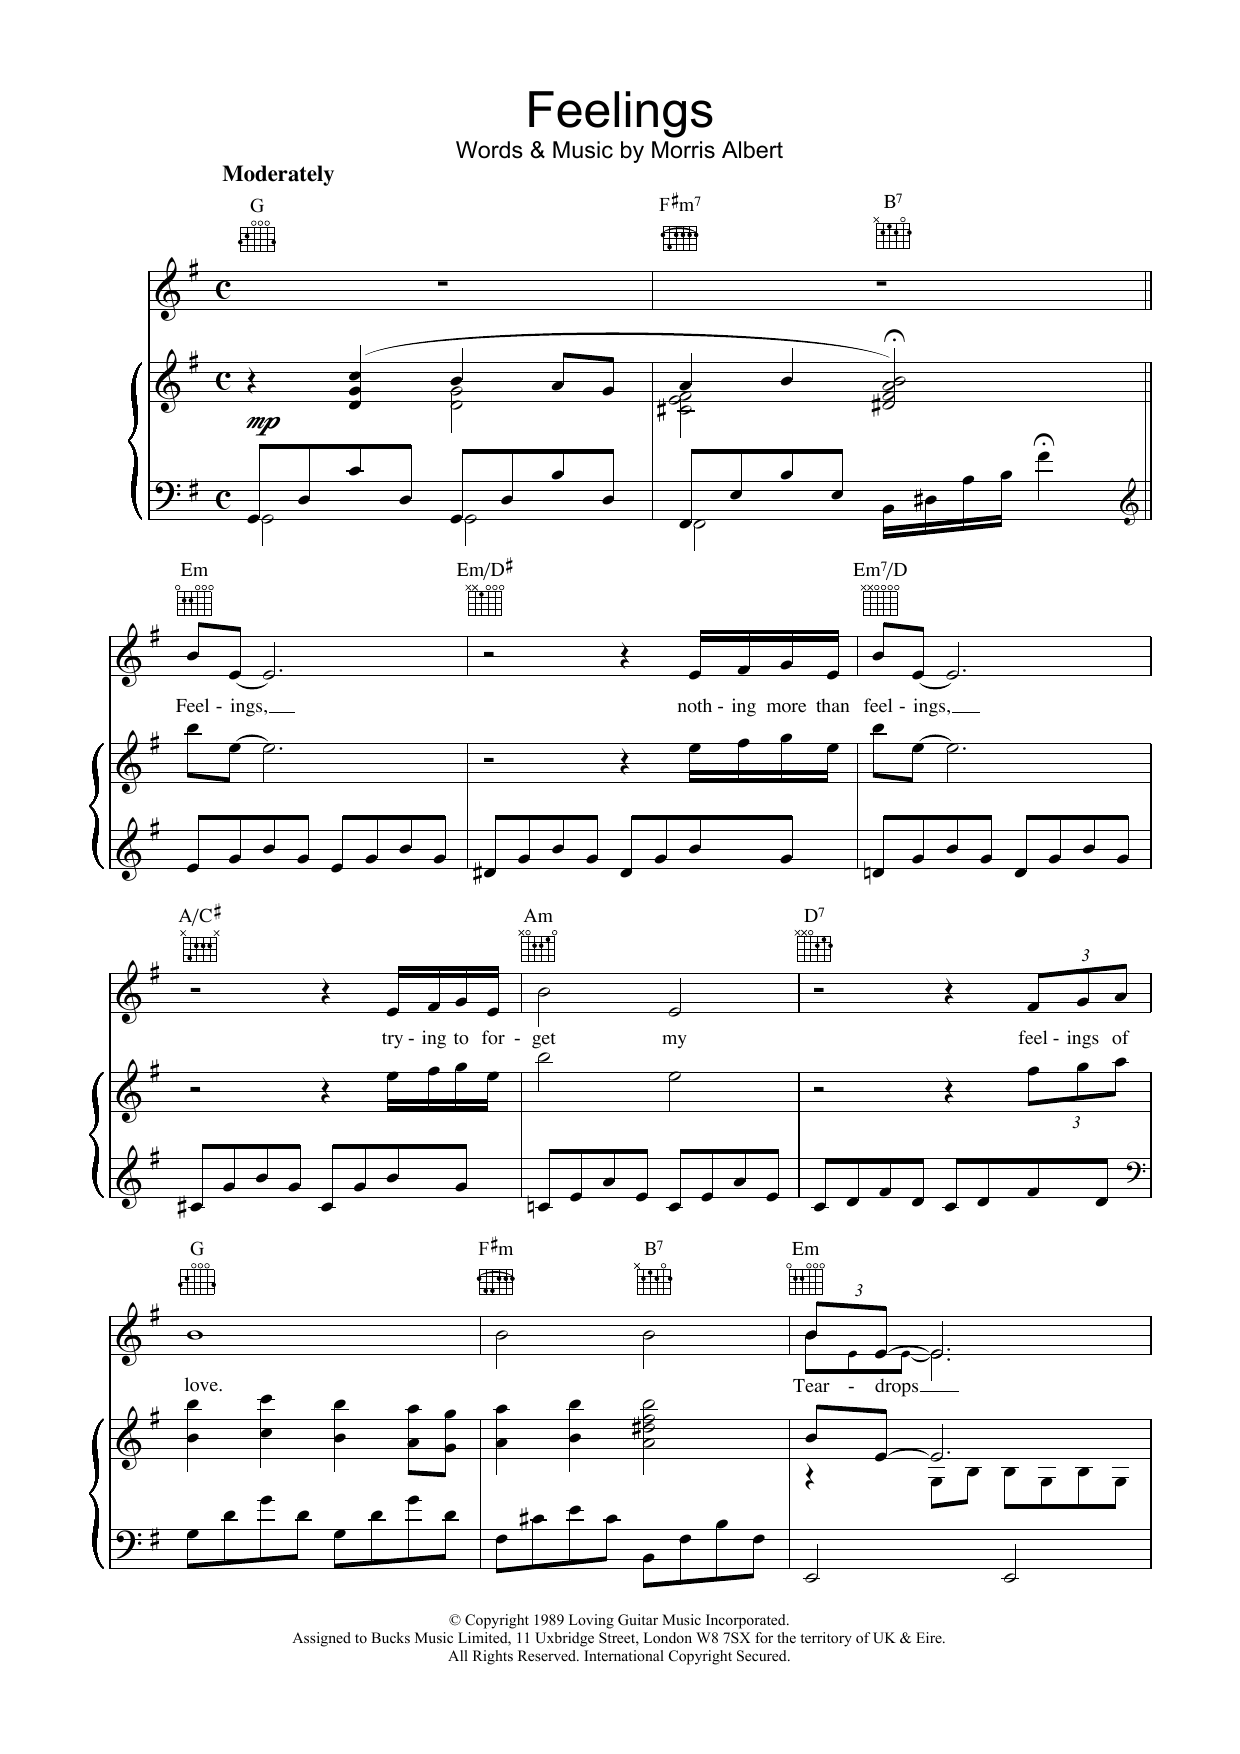 Morris Albert Feelings (Dime) Sheet Music Notes & Chords for Melody Line, Lyrics & Chords - Download or Print PDF